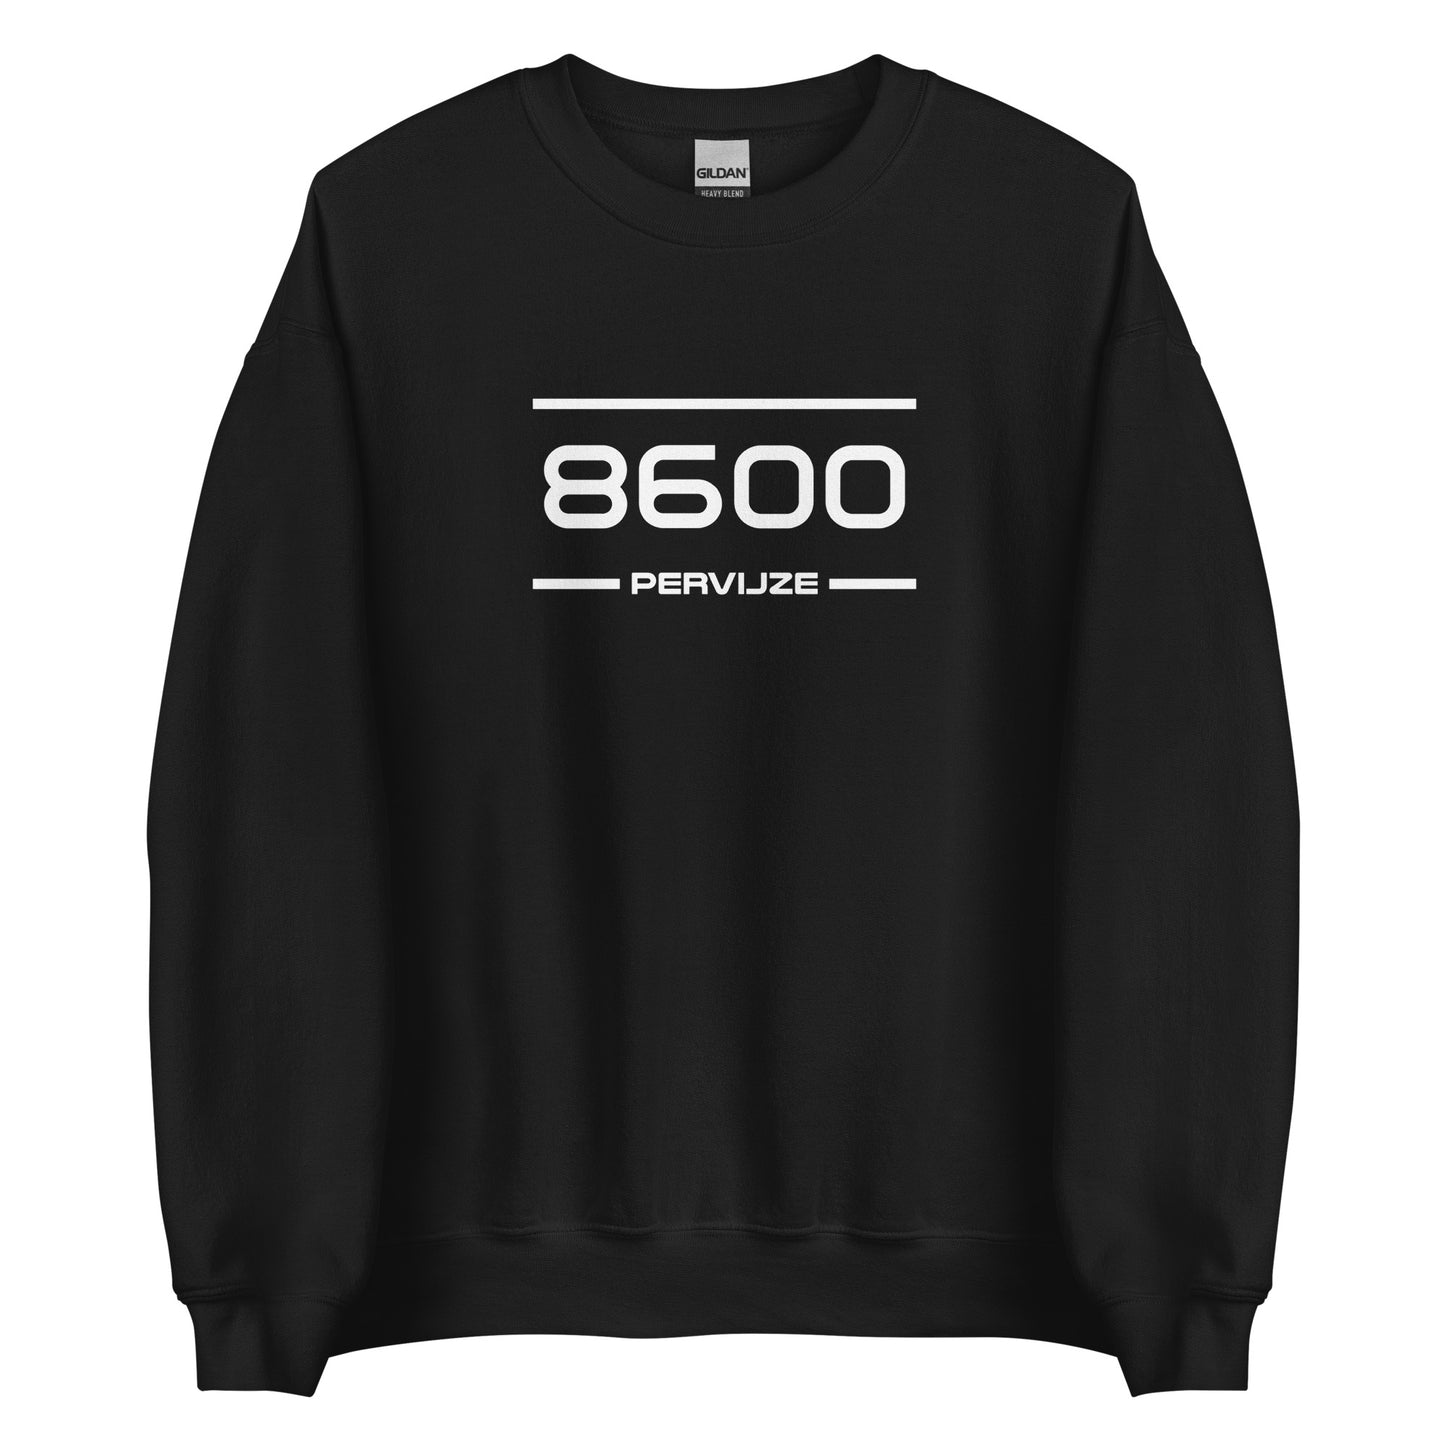 Sweater - 8600 - Pervijze (M/V)